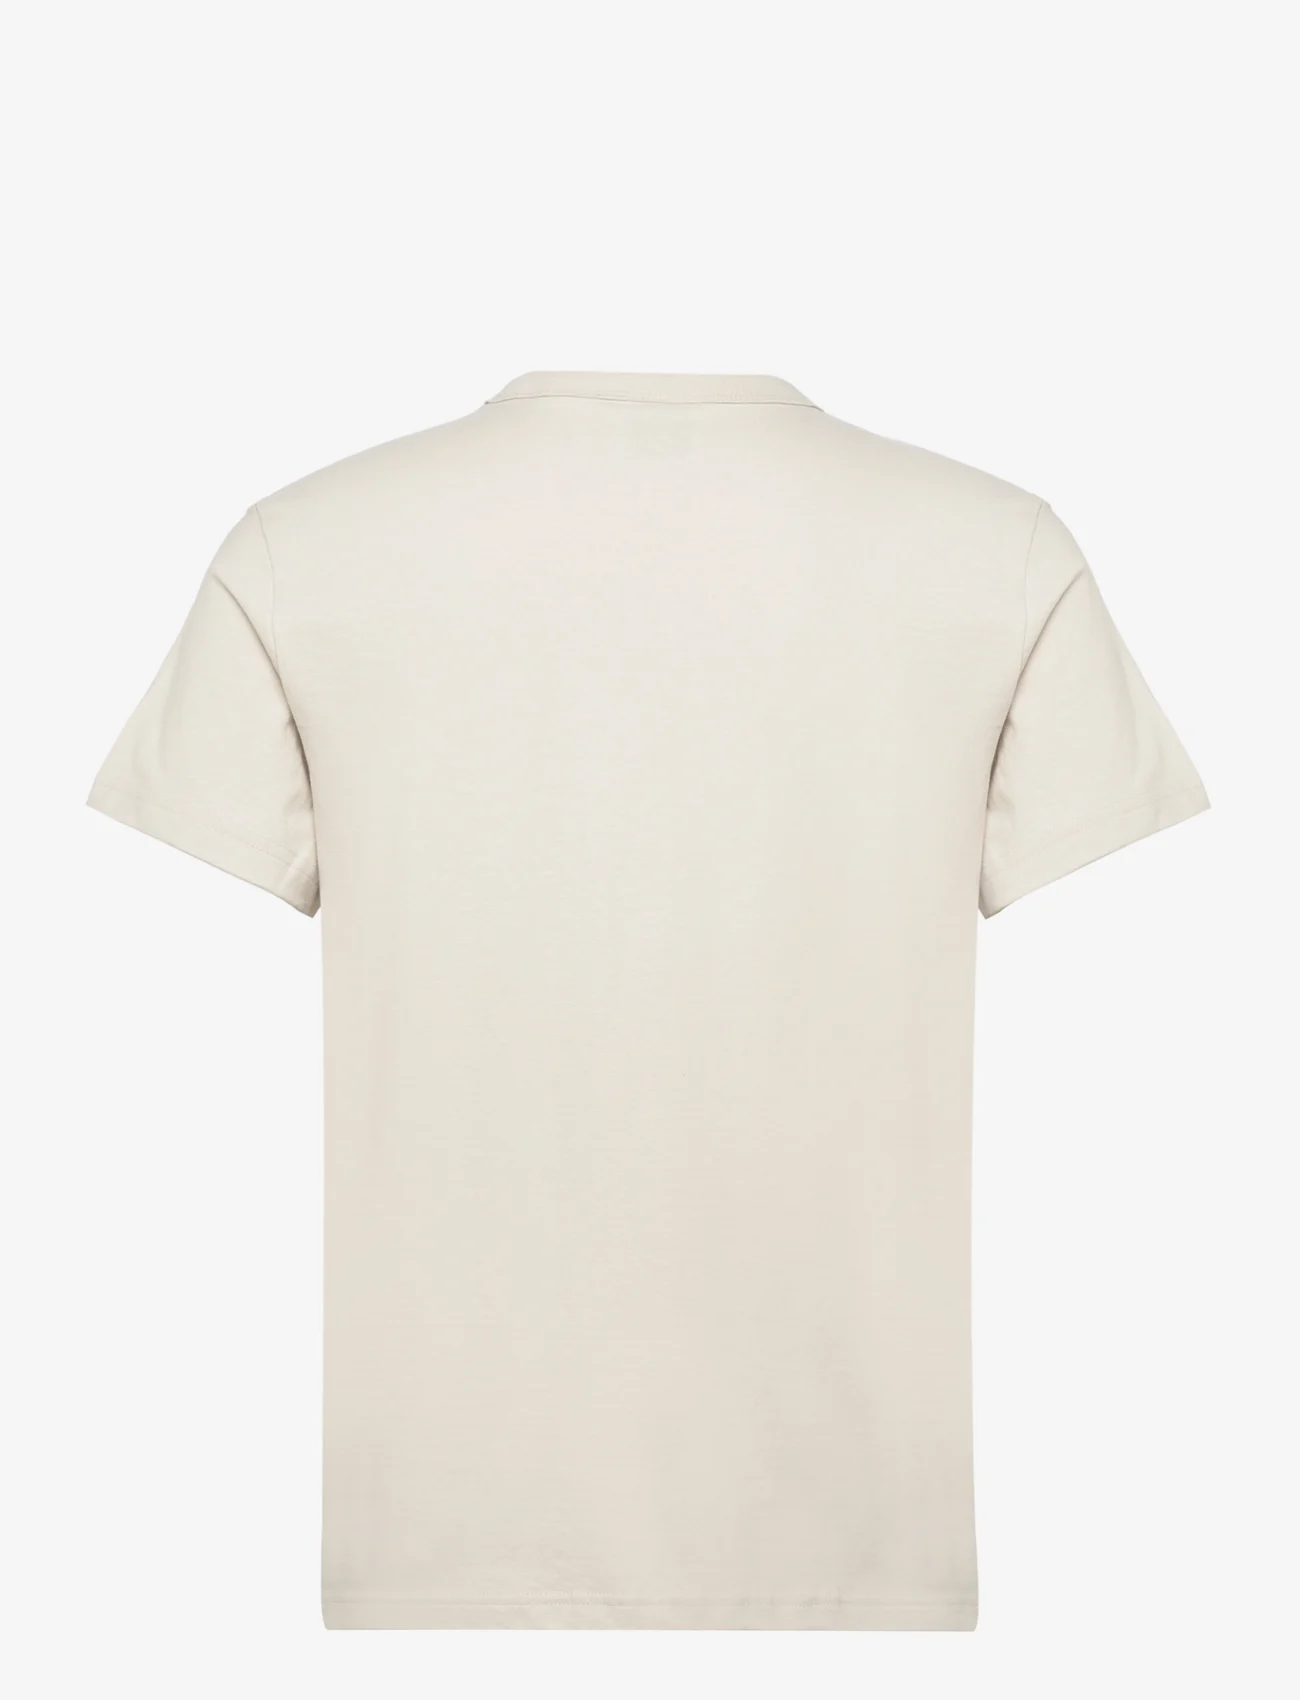 G-Star RAW - Collegic r t - short-sleeved t-shirts - whitebait - 1